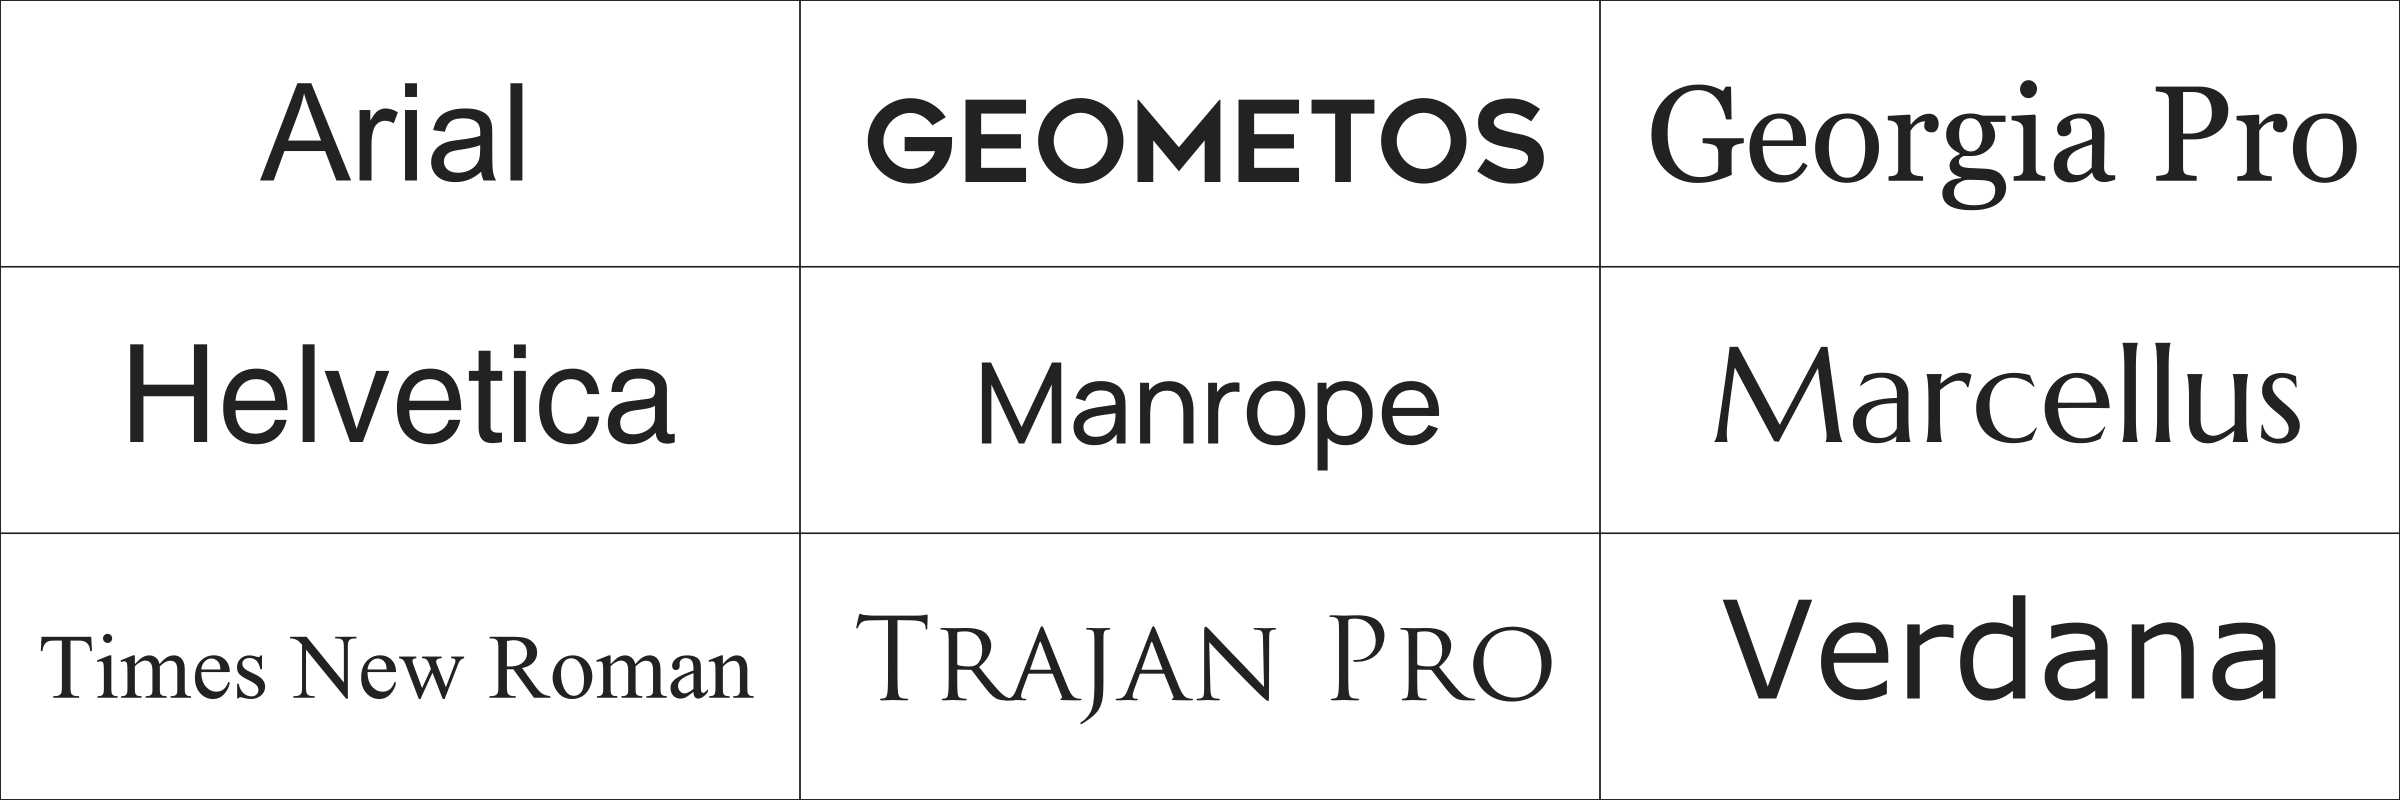 Arial, Geometos, Georgia Pro, Helvetica, Manrope, Marcellus, Times New Roman, Trajan Pro, Verdana